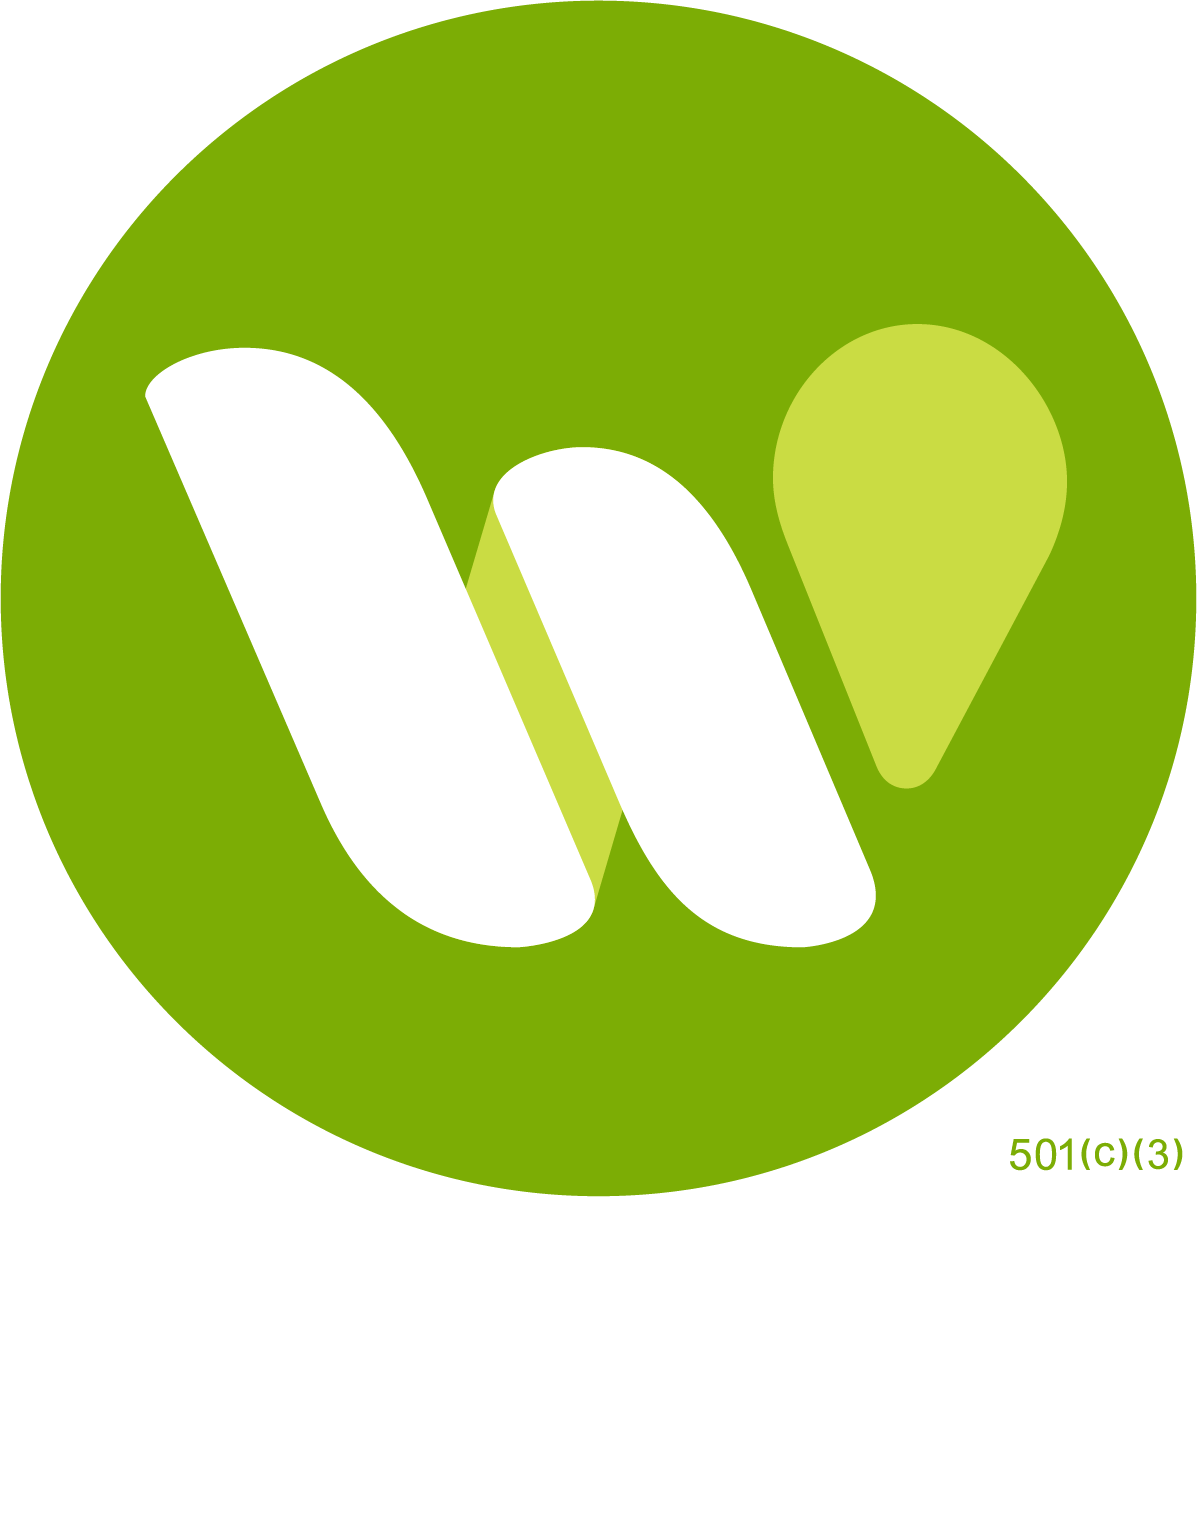 The WonderSeed Foundation